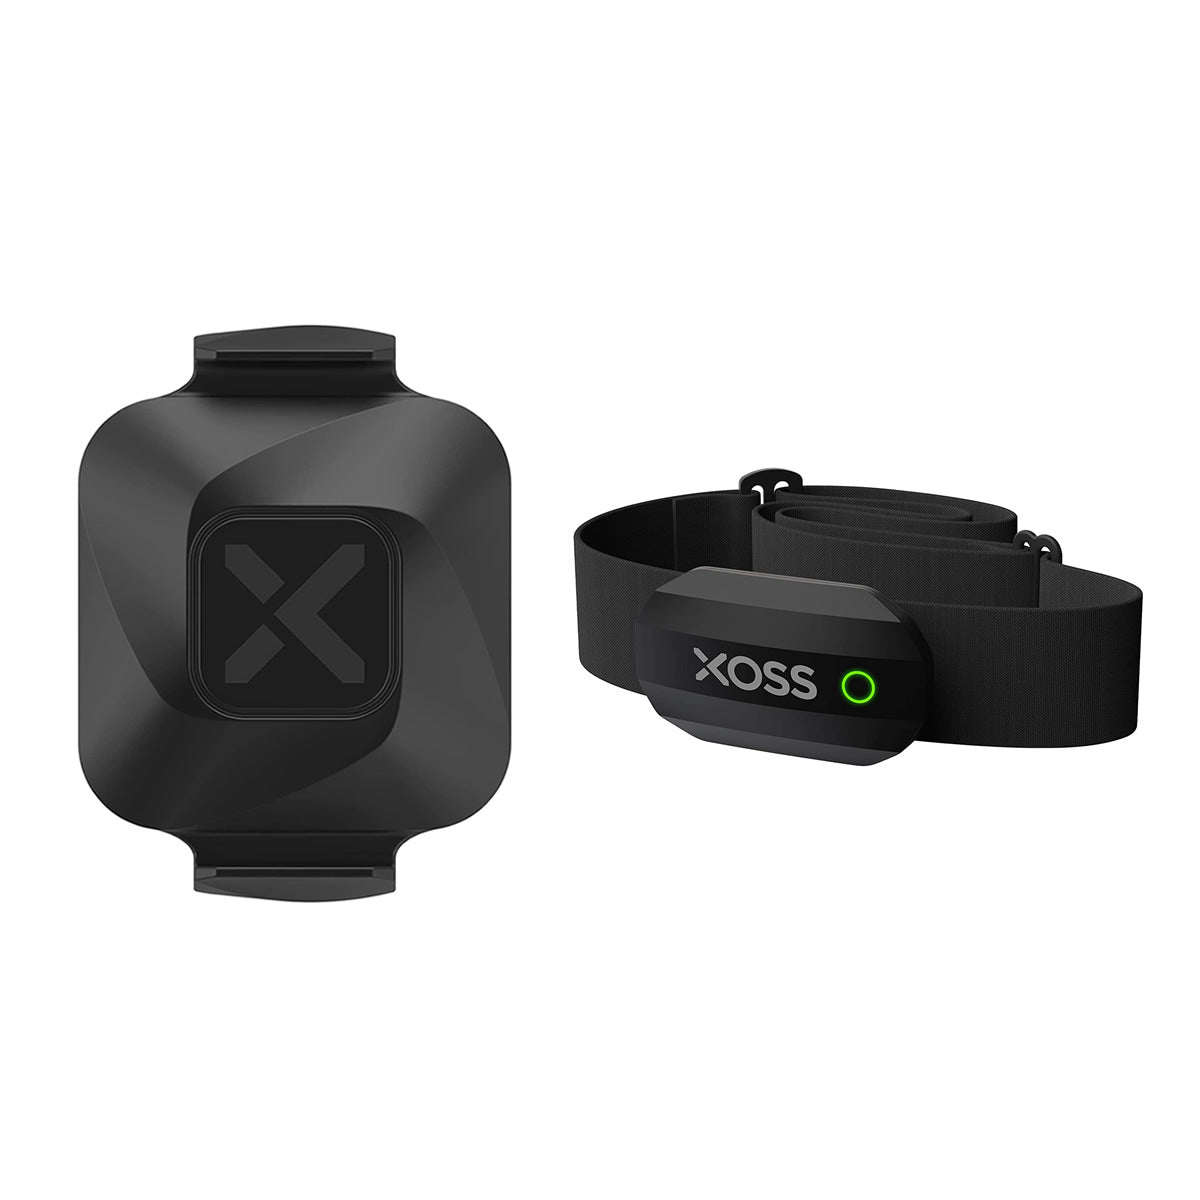 [Combo] XOSS "Vortex" Cadence/Speed Sensor & Heart Rate Monitor - XOSS.CO